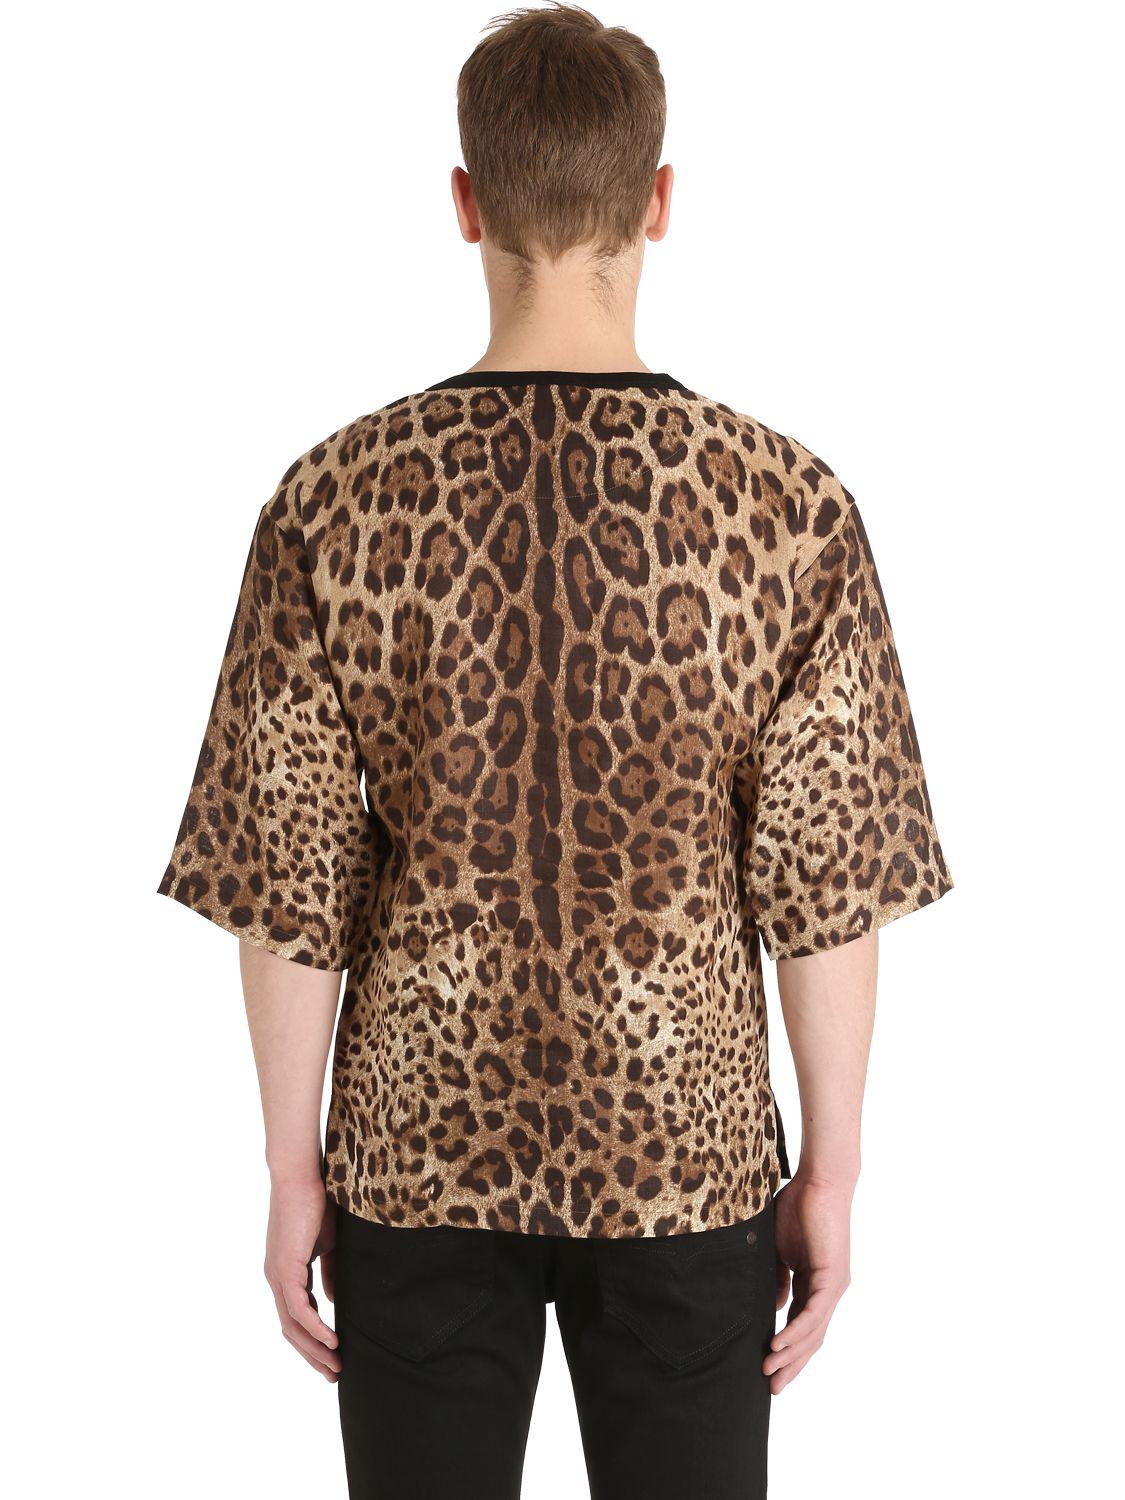 Dolce & Gabbana Leopard Printed Linen T-shirt in Brown for Men - Lyst